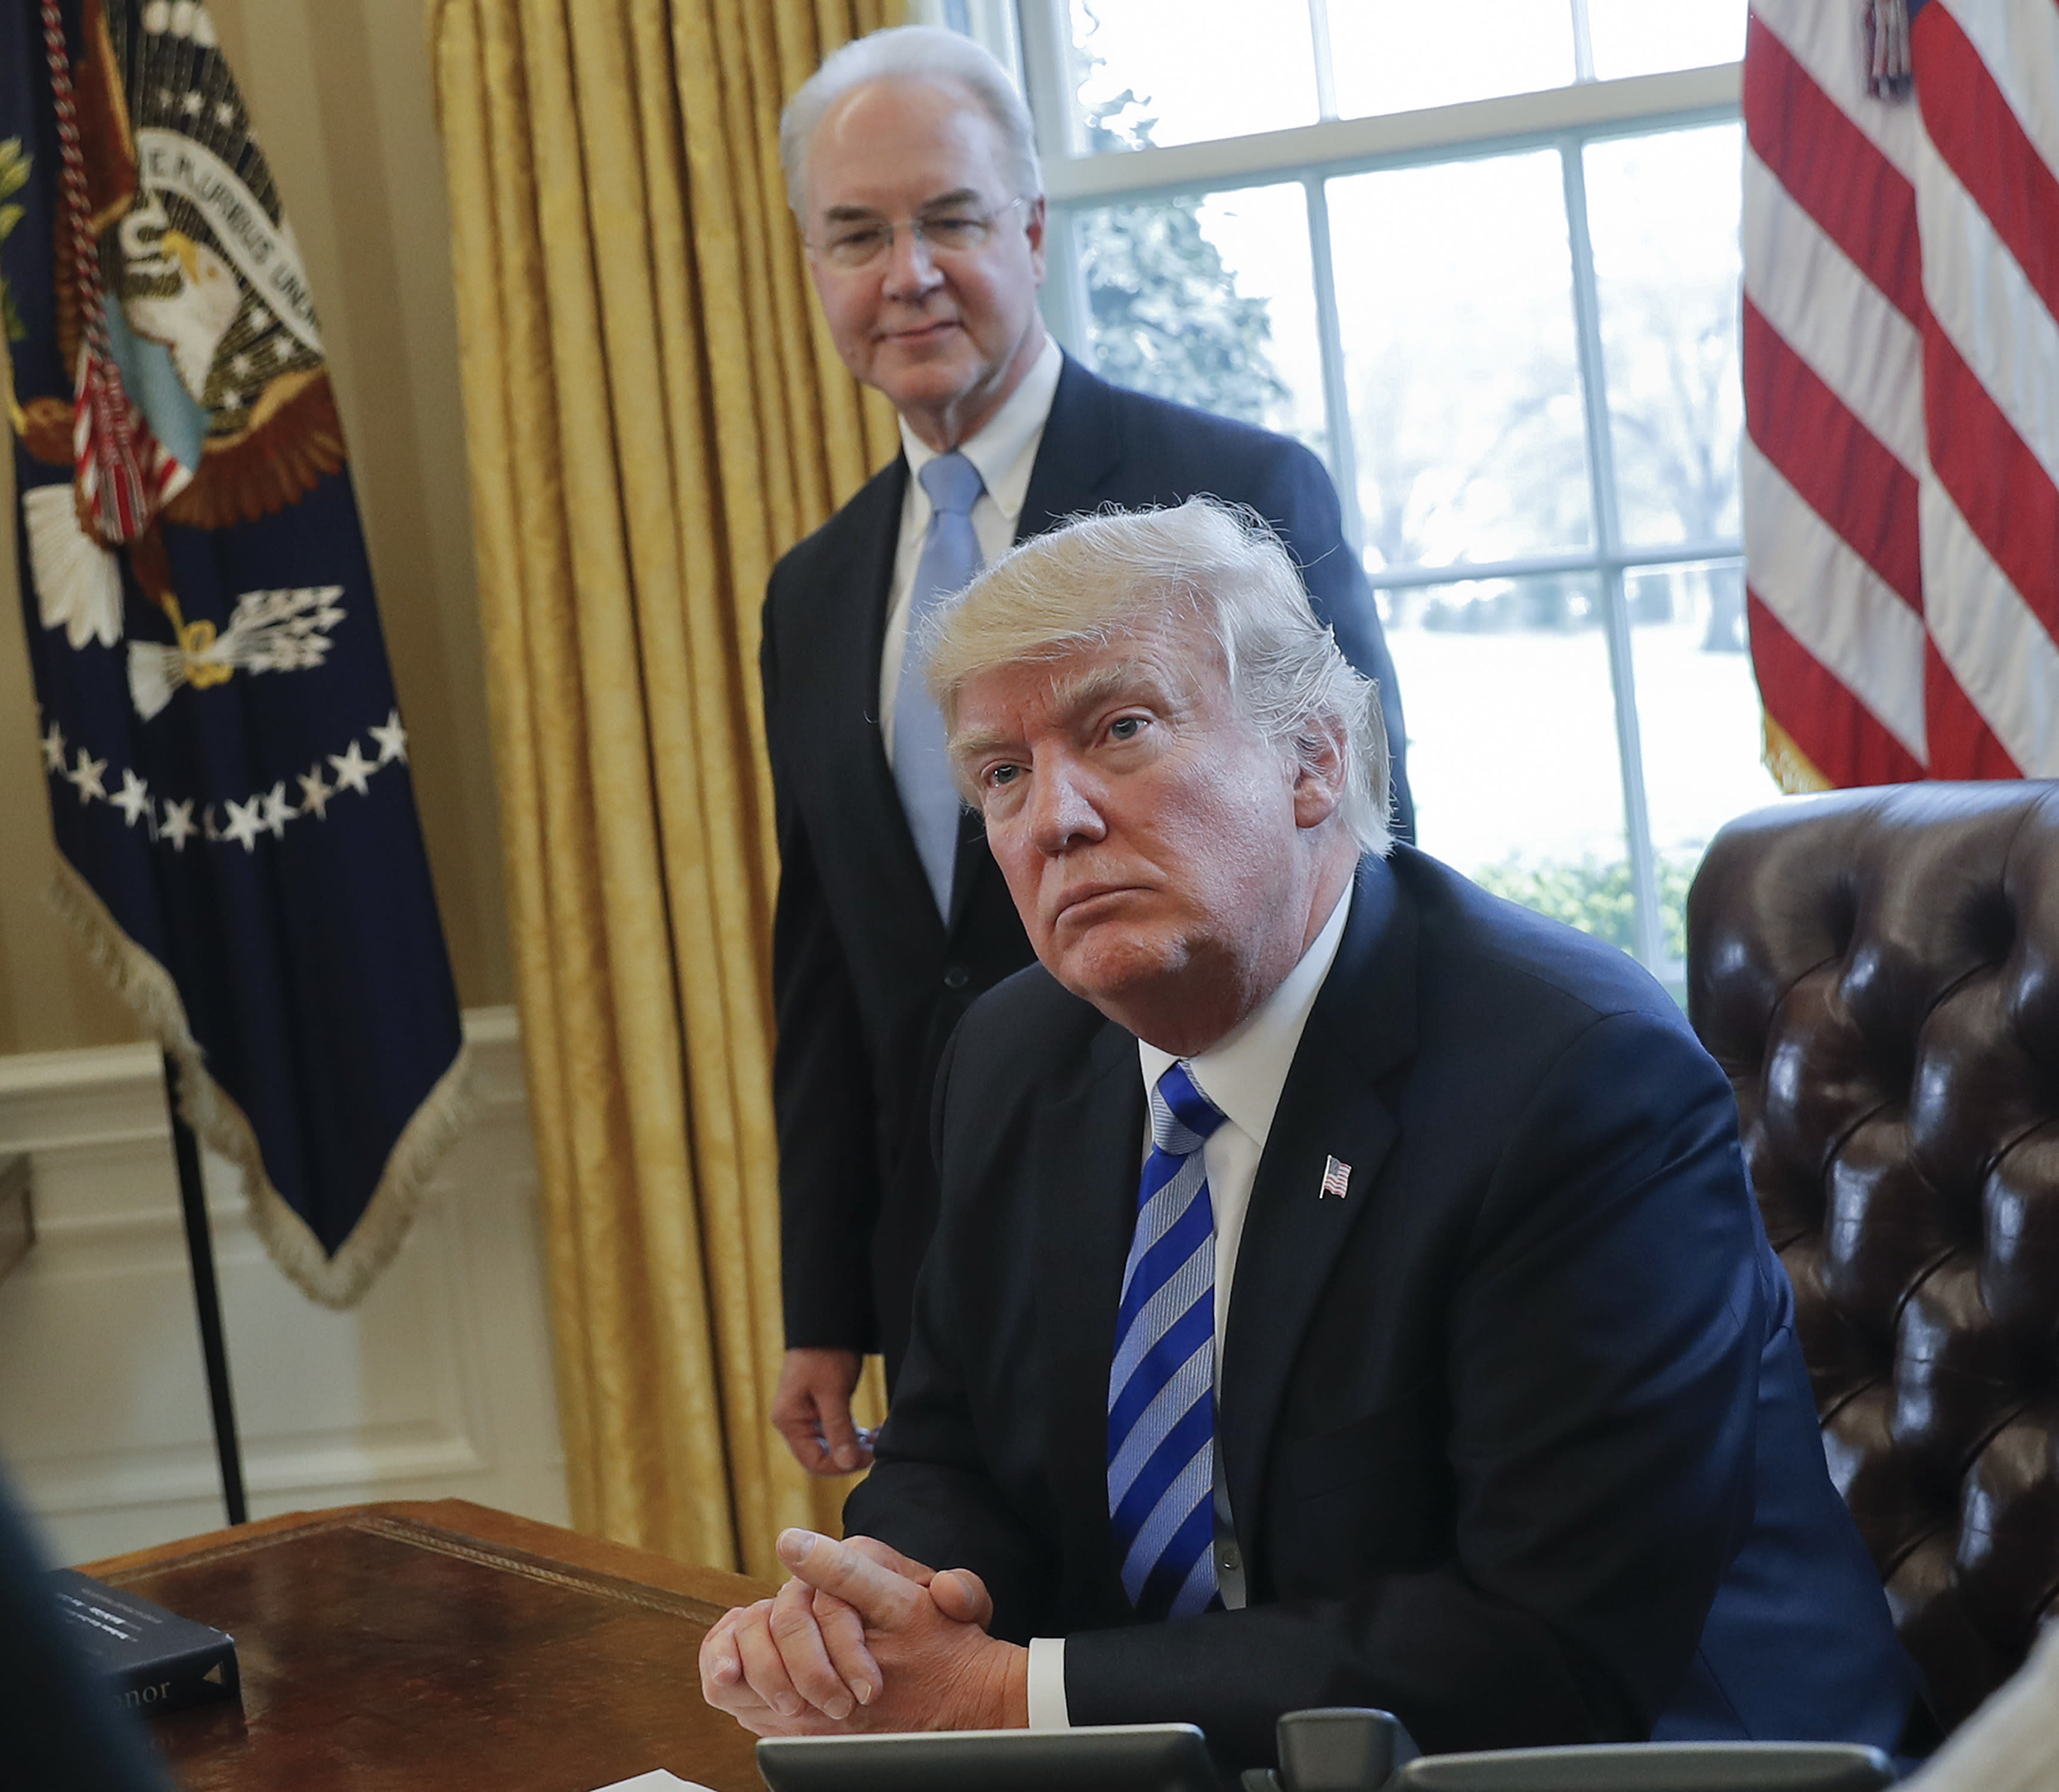 Uncertainty grows as Trump delays a health care decision